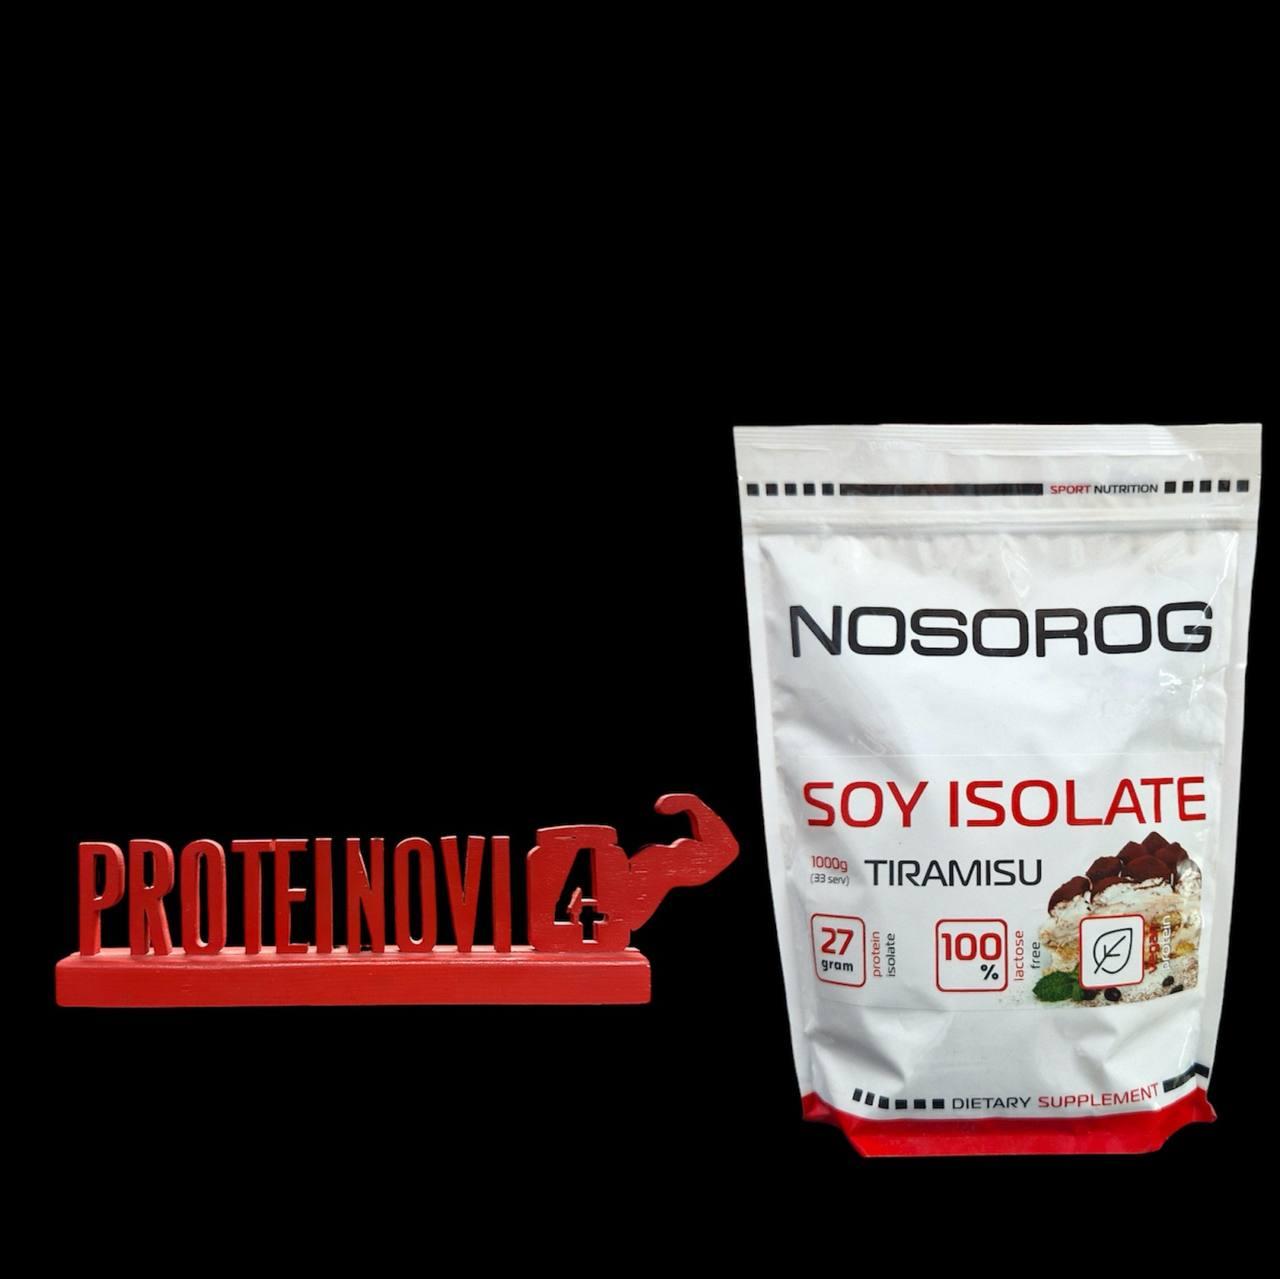 Протеїн соєвий ізолят Nosorog Soy Isolate 1kg для спорту